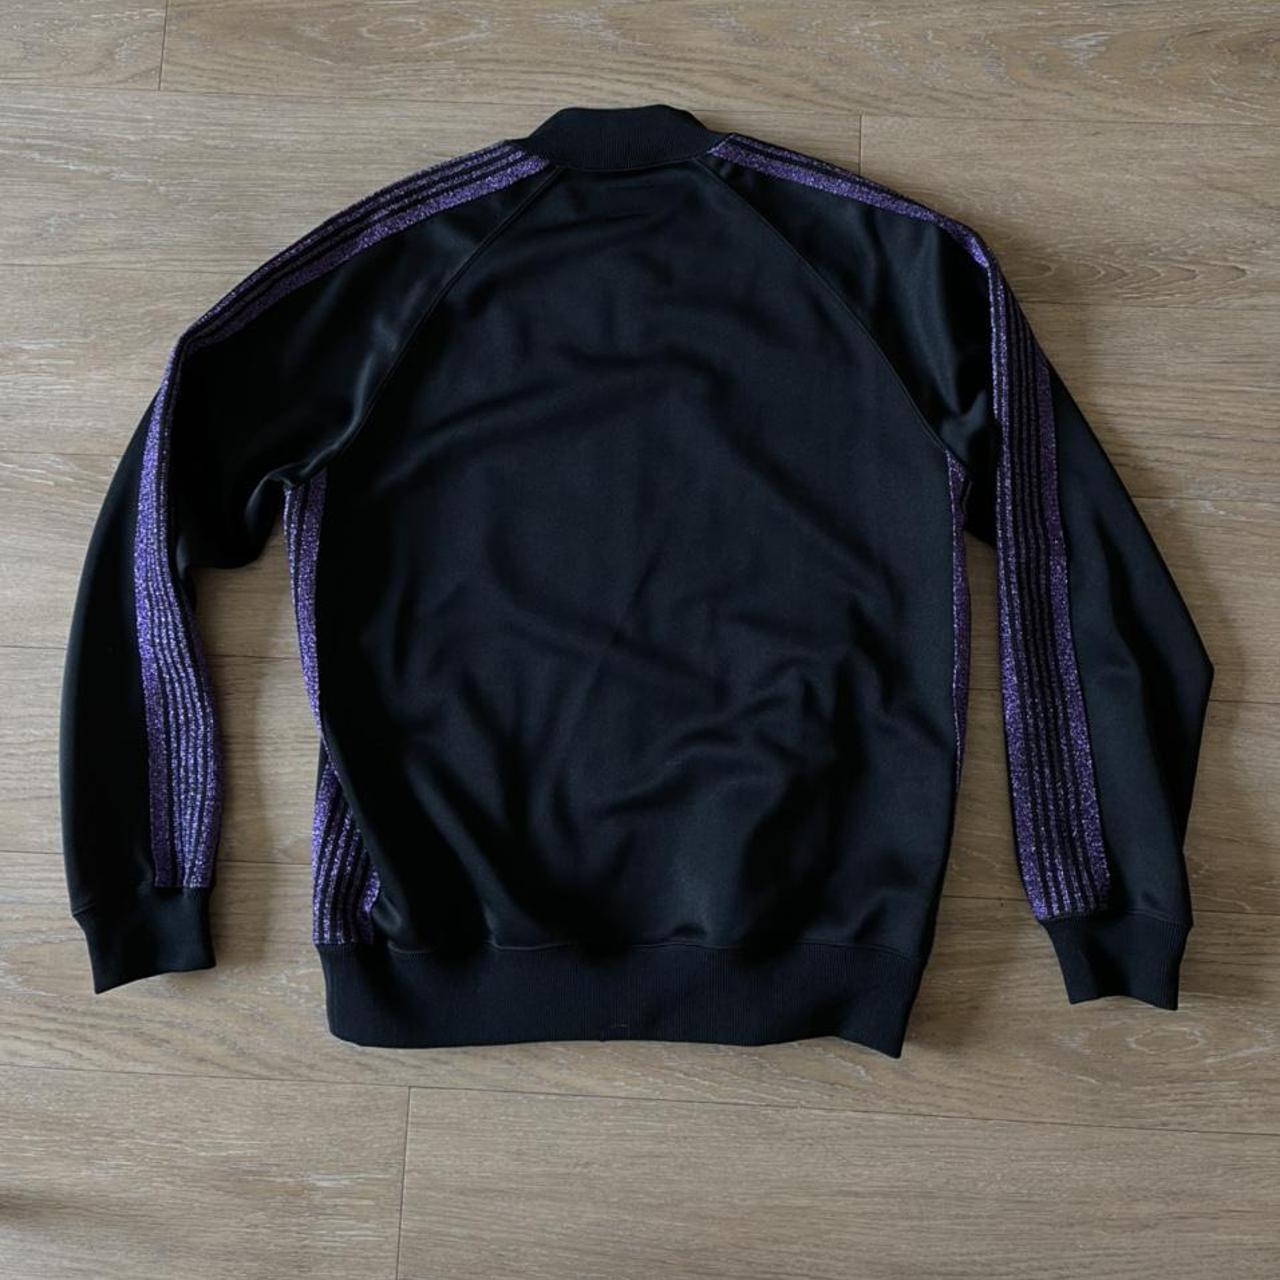 Needles Men's Black and Purple Jacket (3)